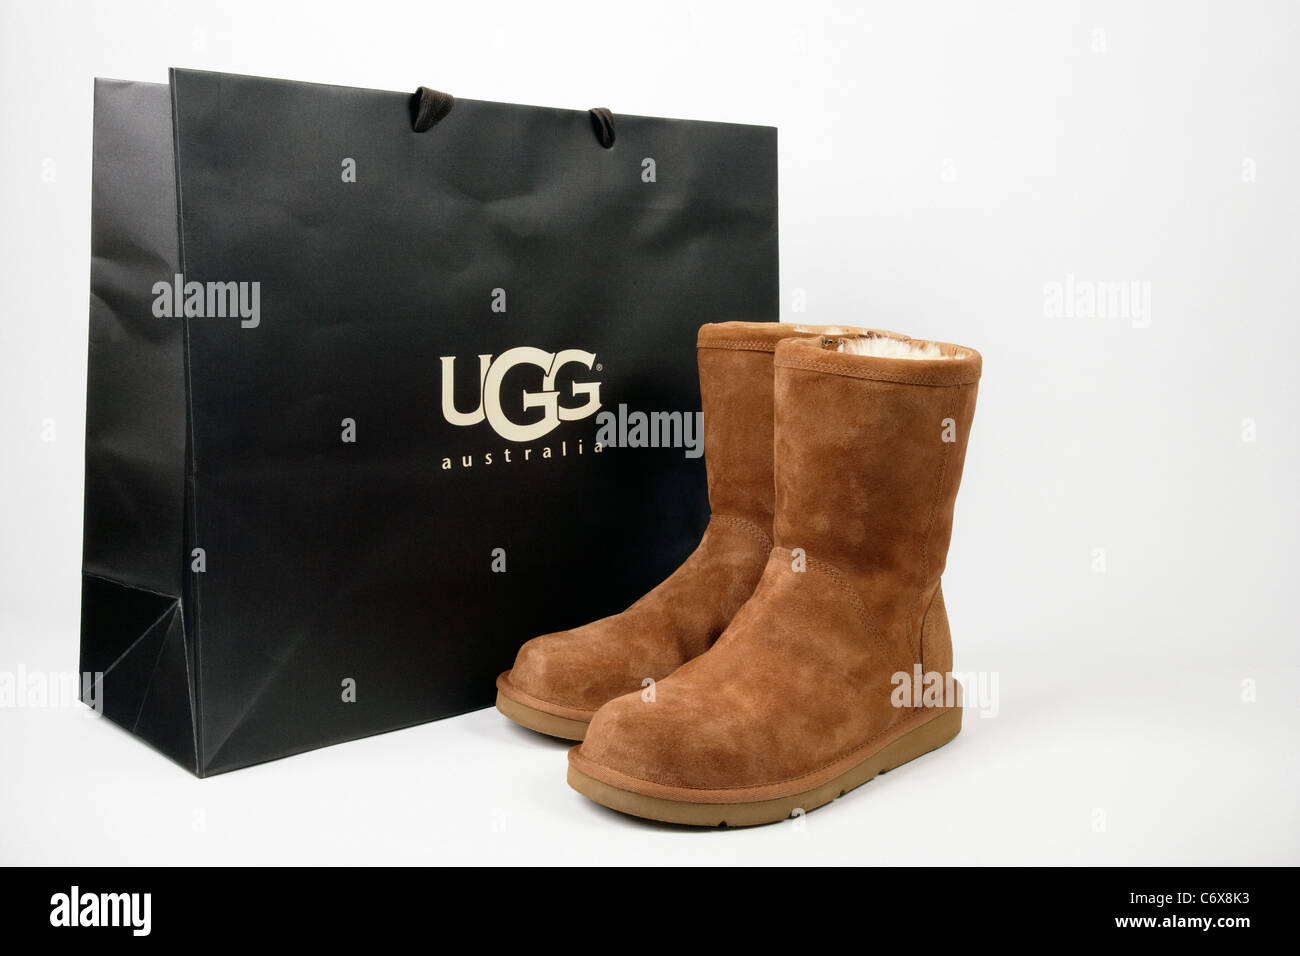 the original ugg boots